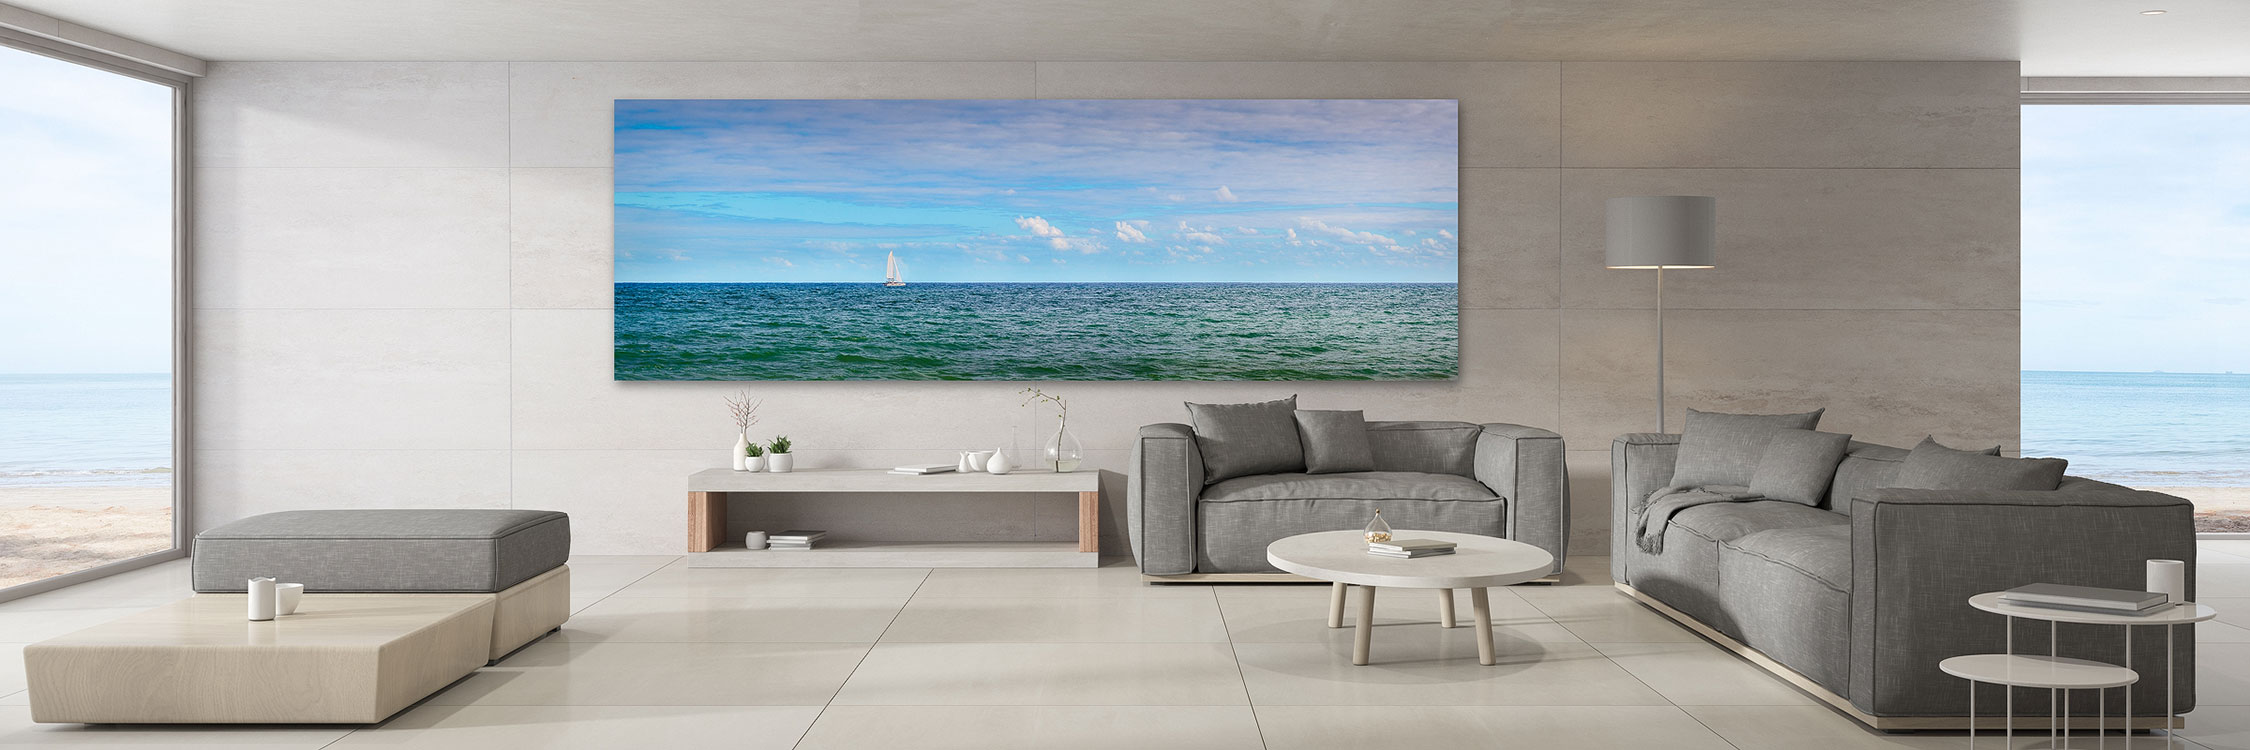 Panoramic print medium fine art image ona wall of a contemporary ocean front room - interior design - Gintchin Fine Art